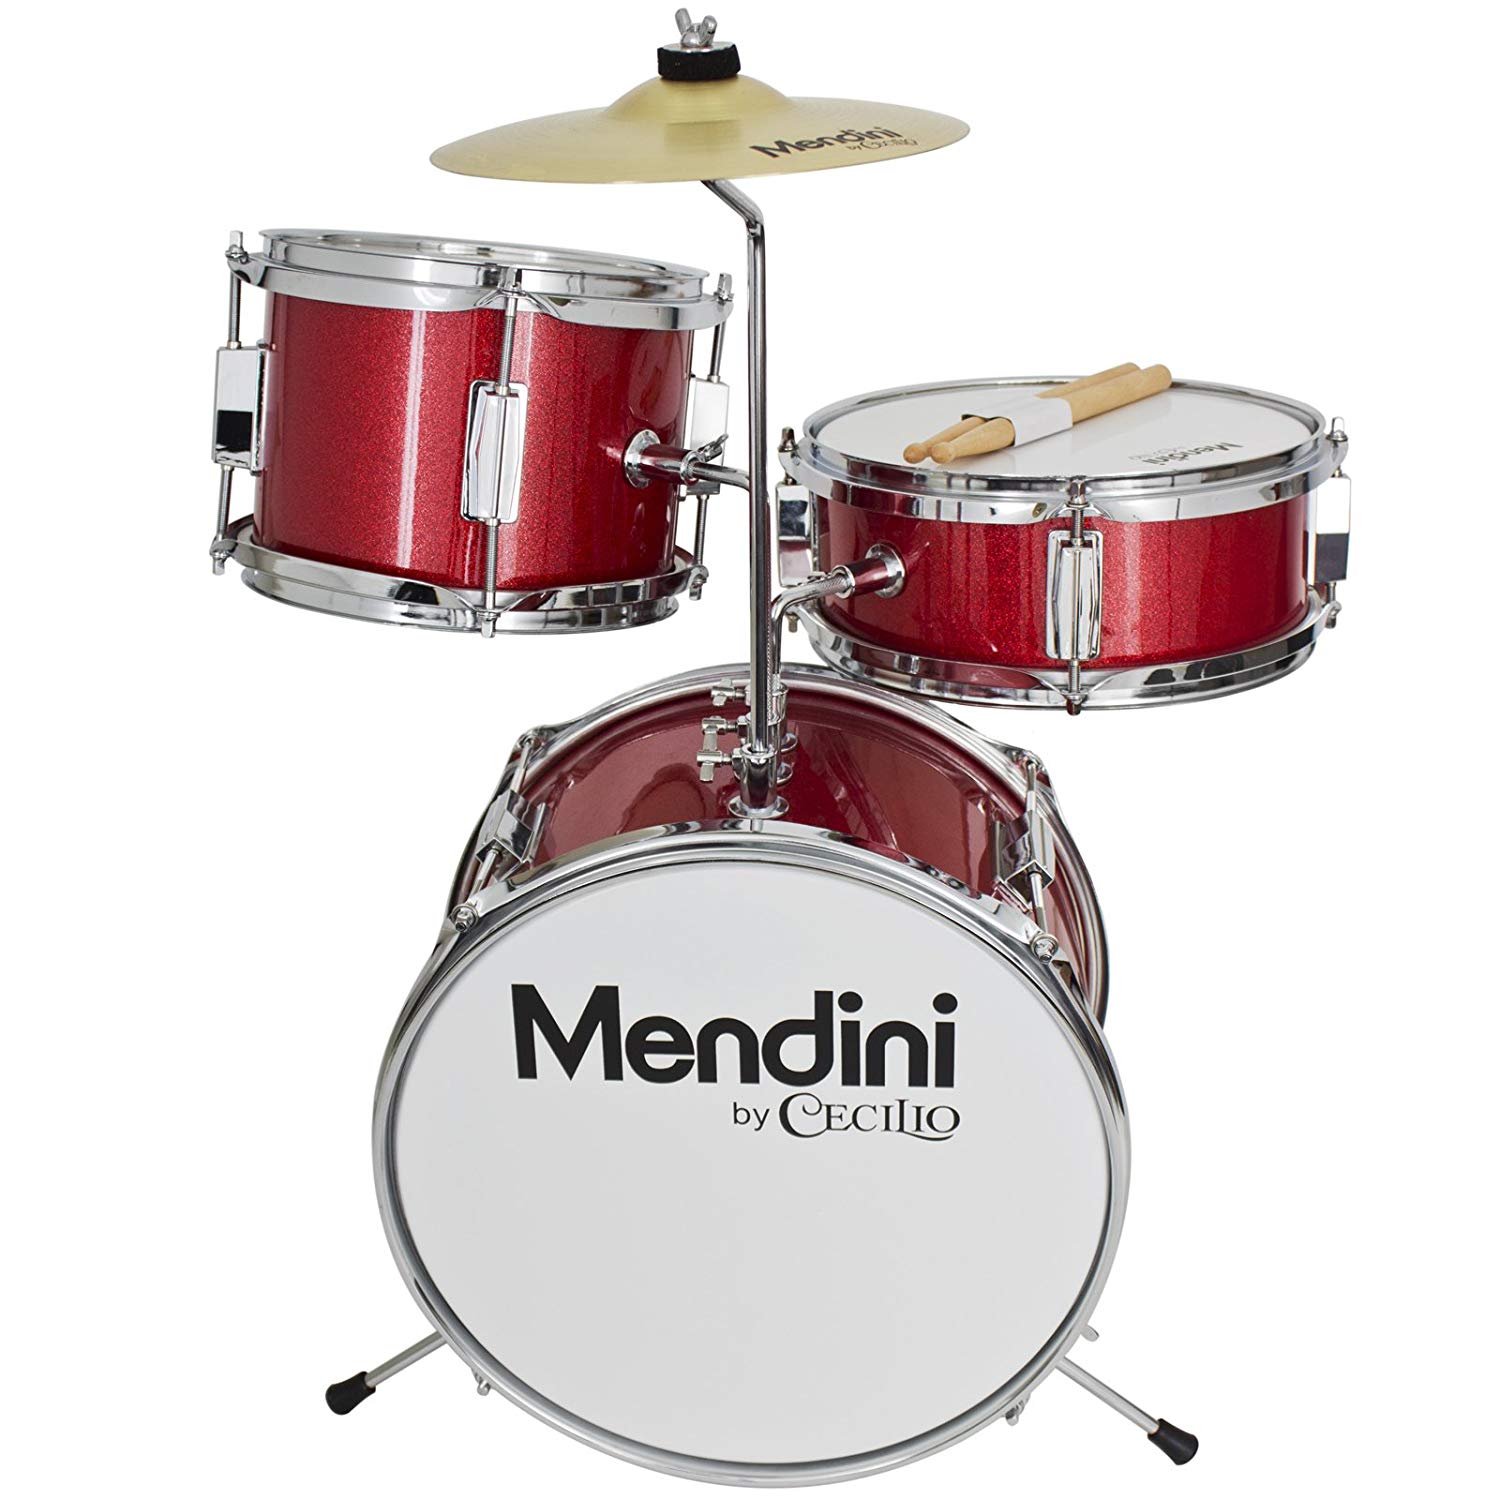 Mendini by Cecilio 13 Inch 3-Piece Kids/Junior Drum Set